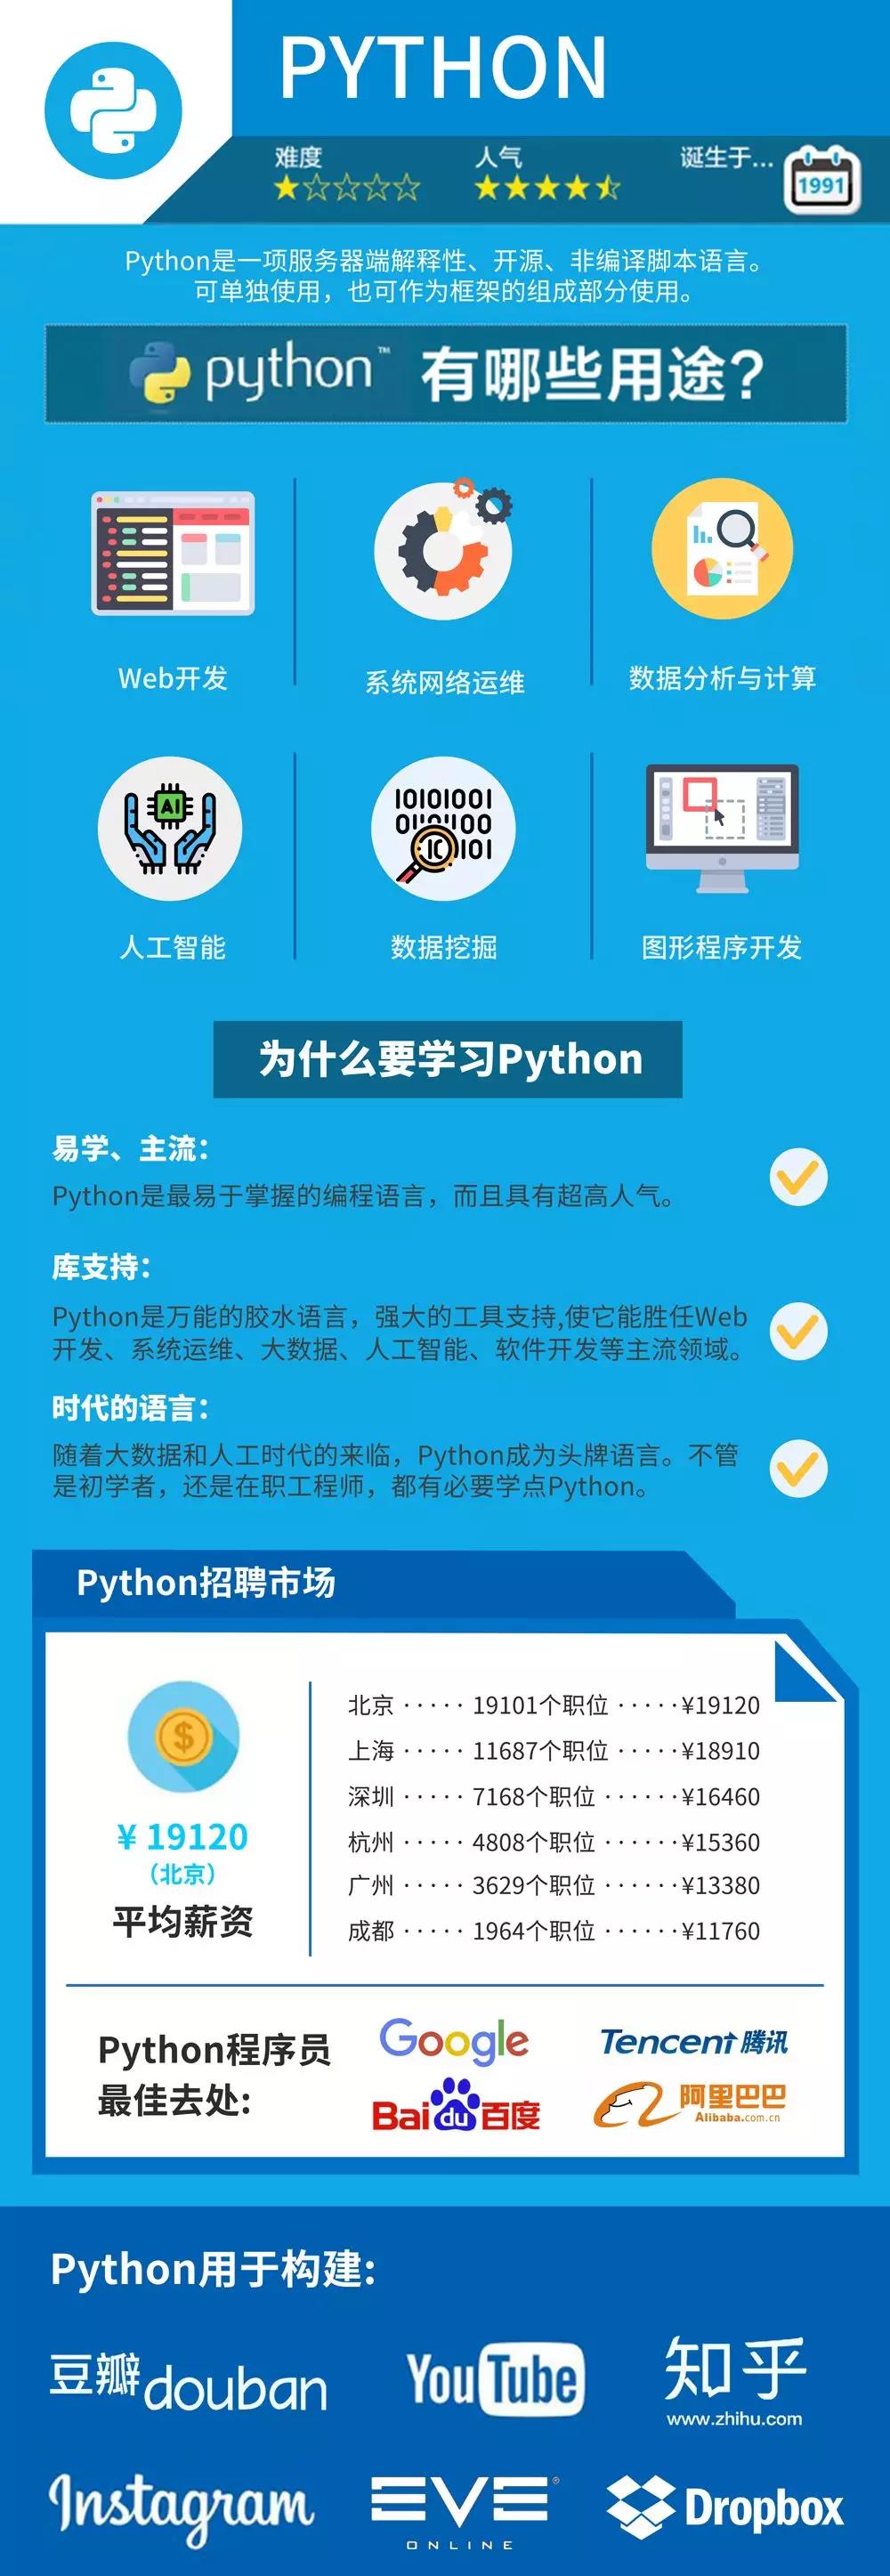 Python的优势以及就业情况